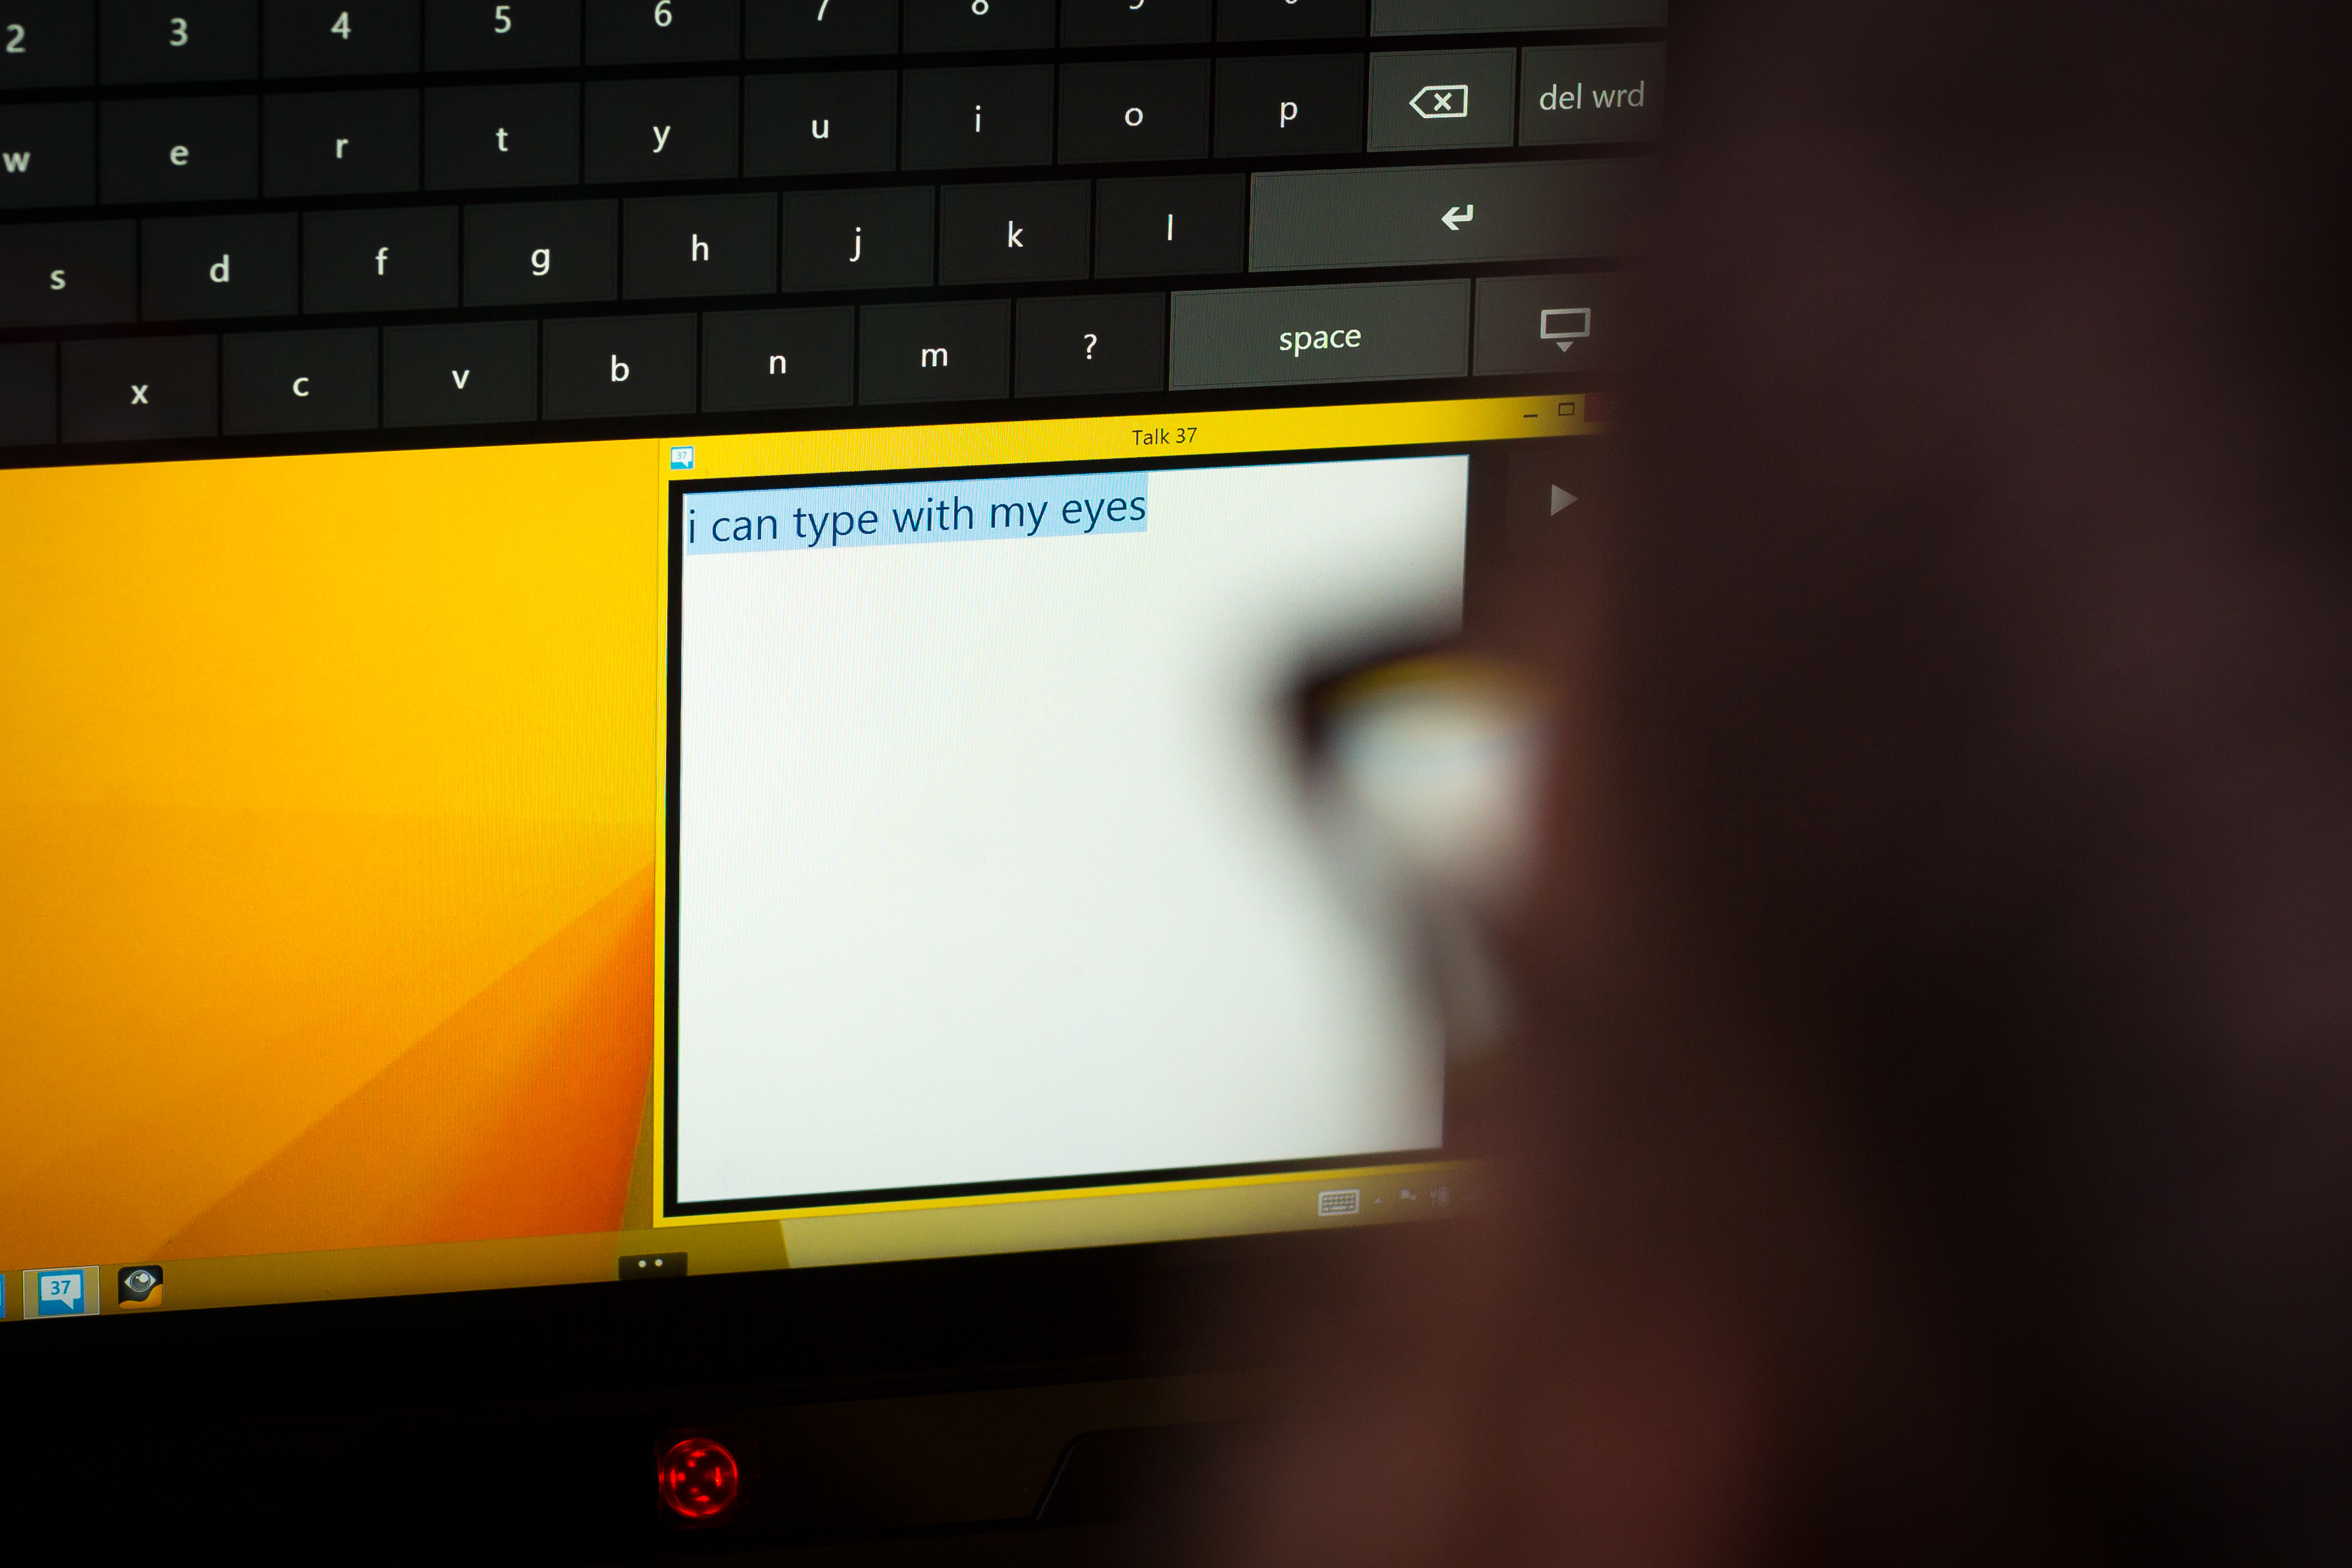 Software engineer lead Jay Beavers uses his team’s speech-generating device. Credit: Scott Eklund